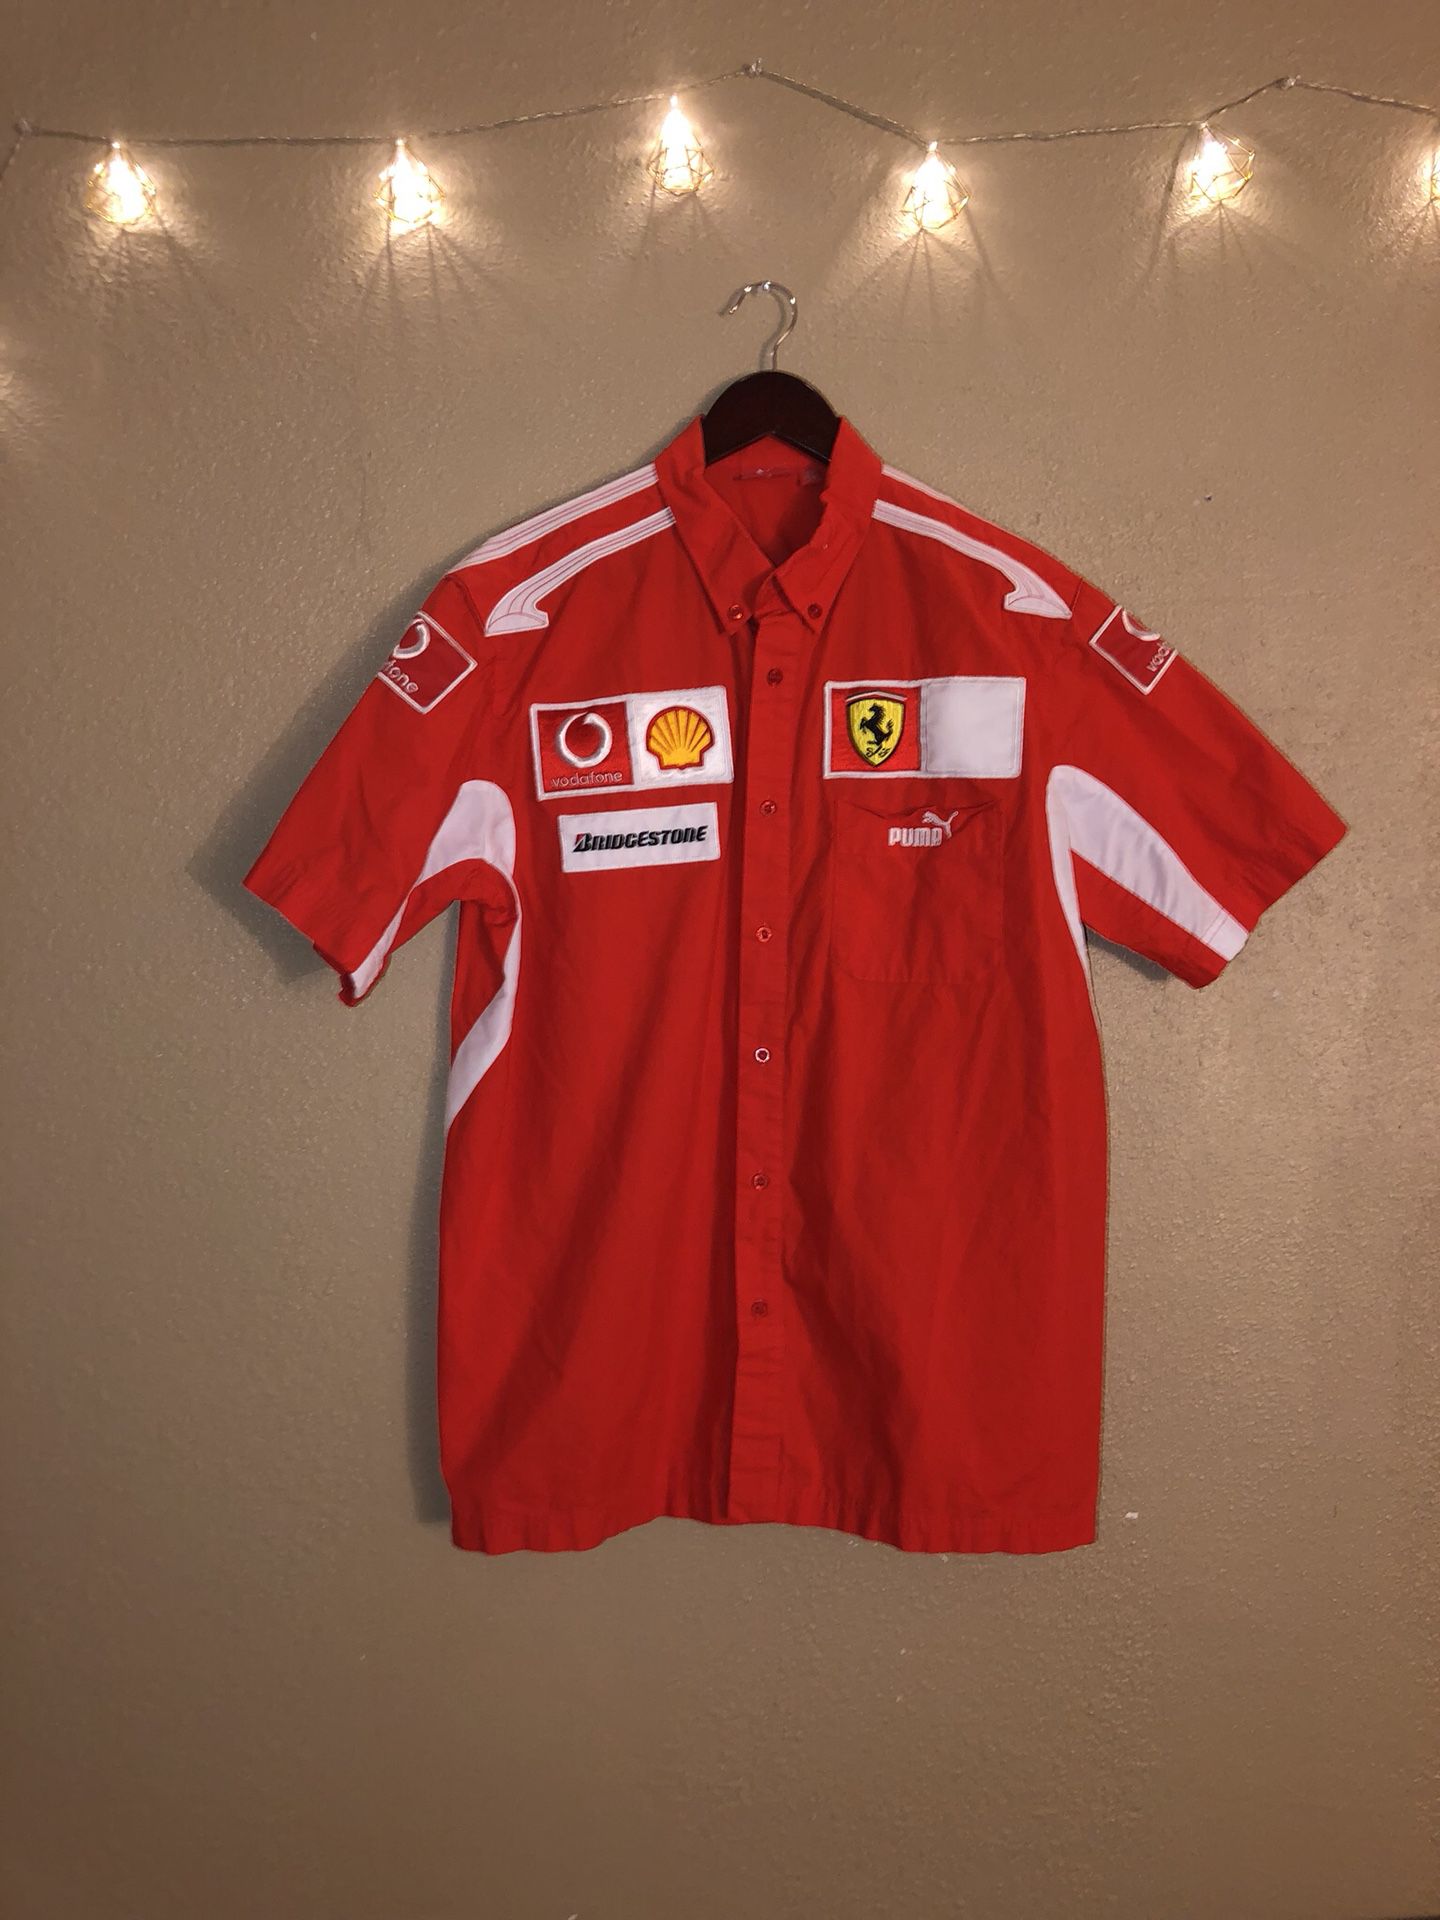 Puma Team Ferrari Shirt, Size Large